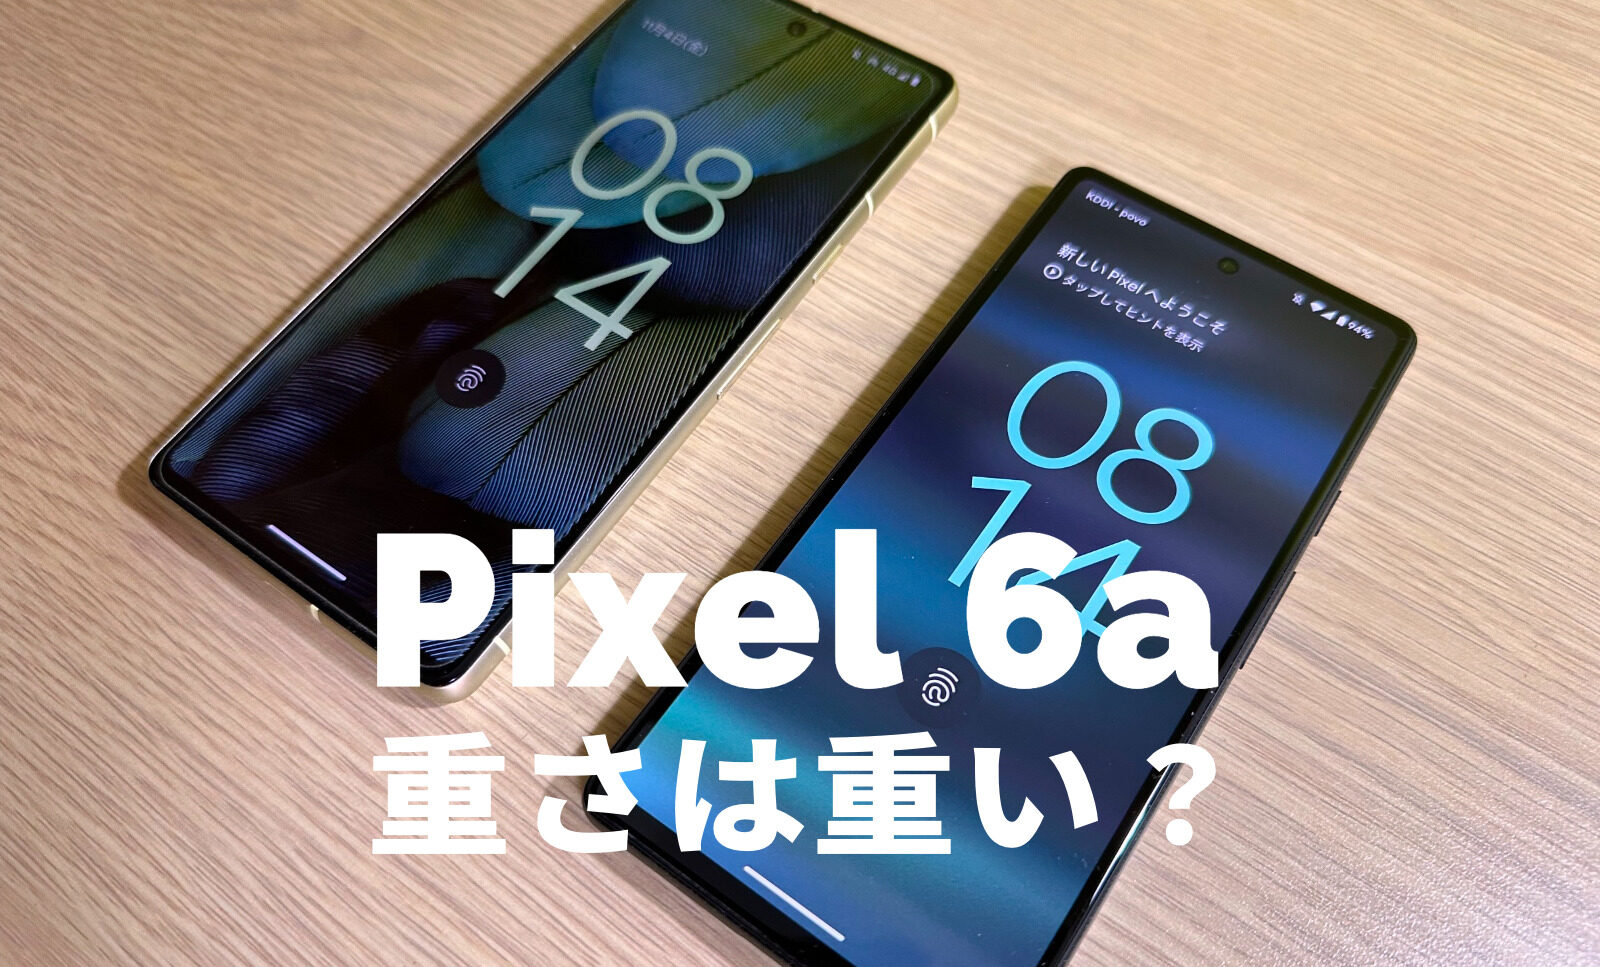 Google Pixel 6aの重さは重い？小型化して片手で持ちやすい？【ピクセル6a】のサムネイル画像